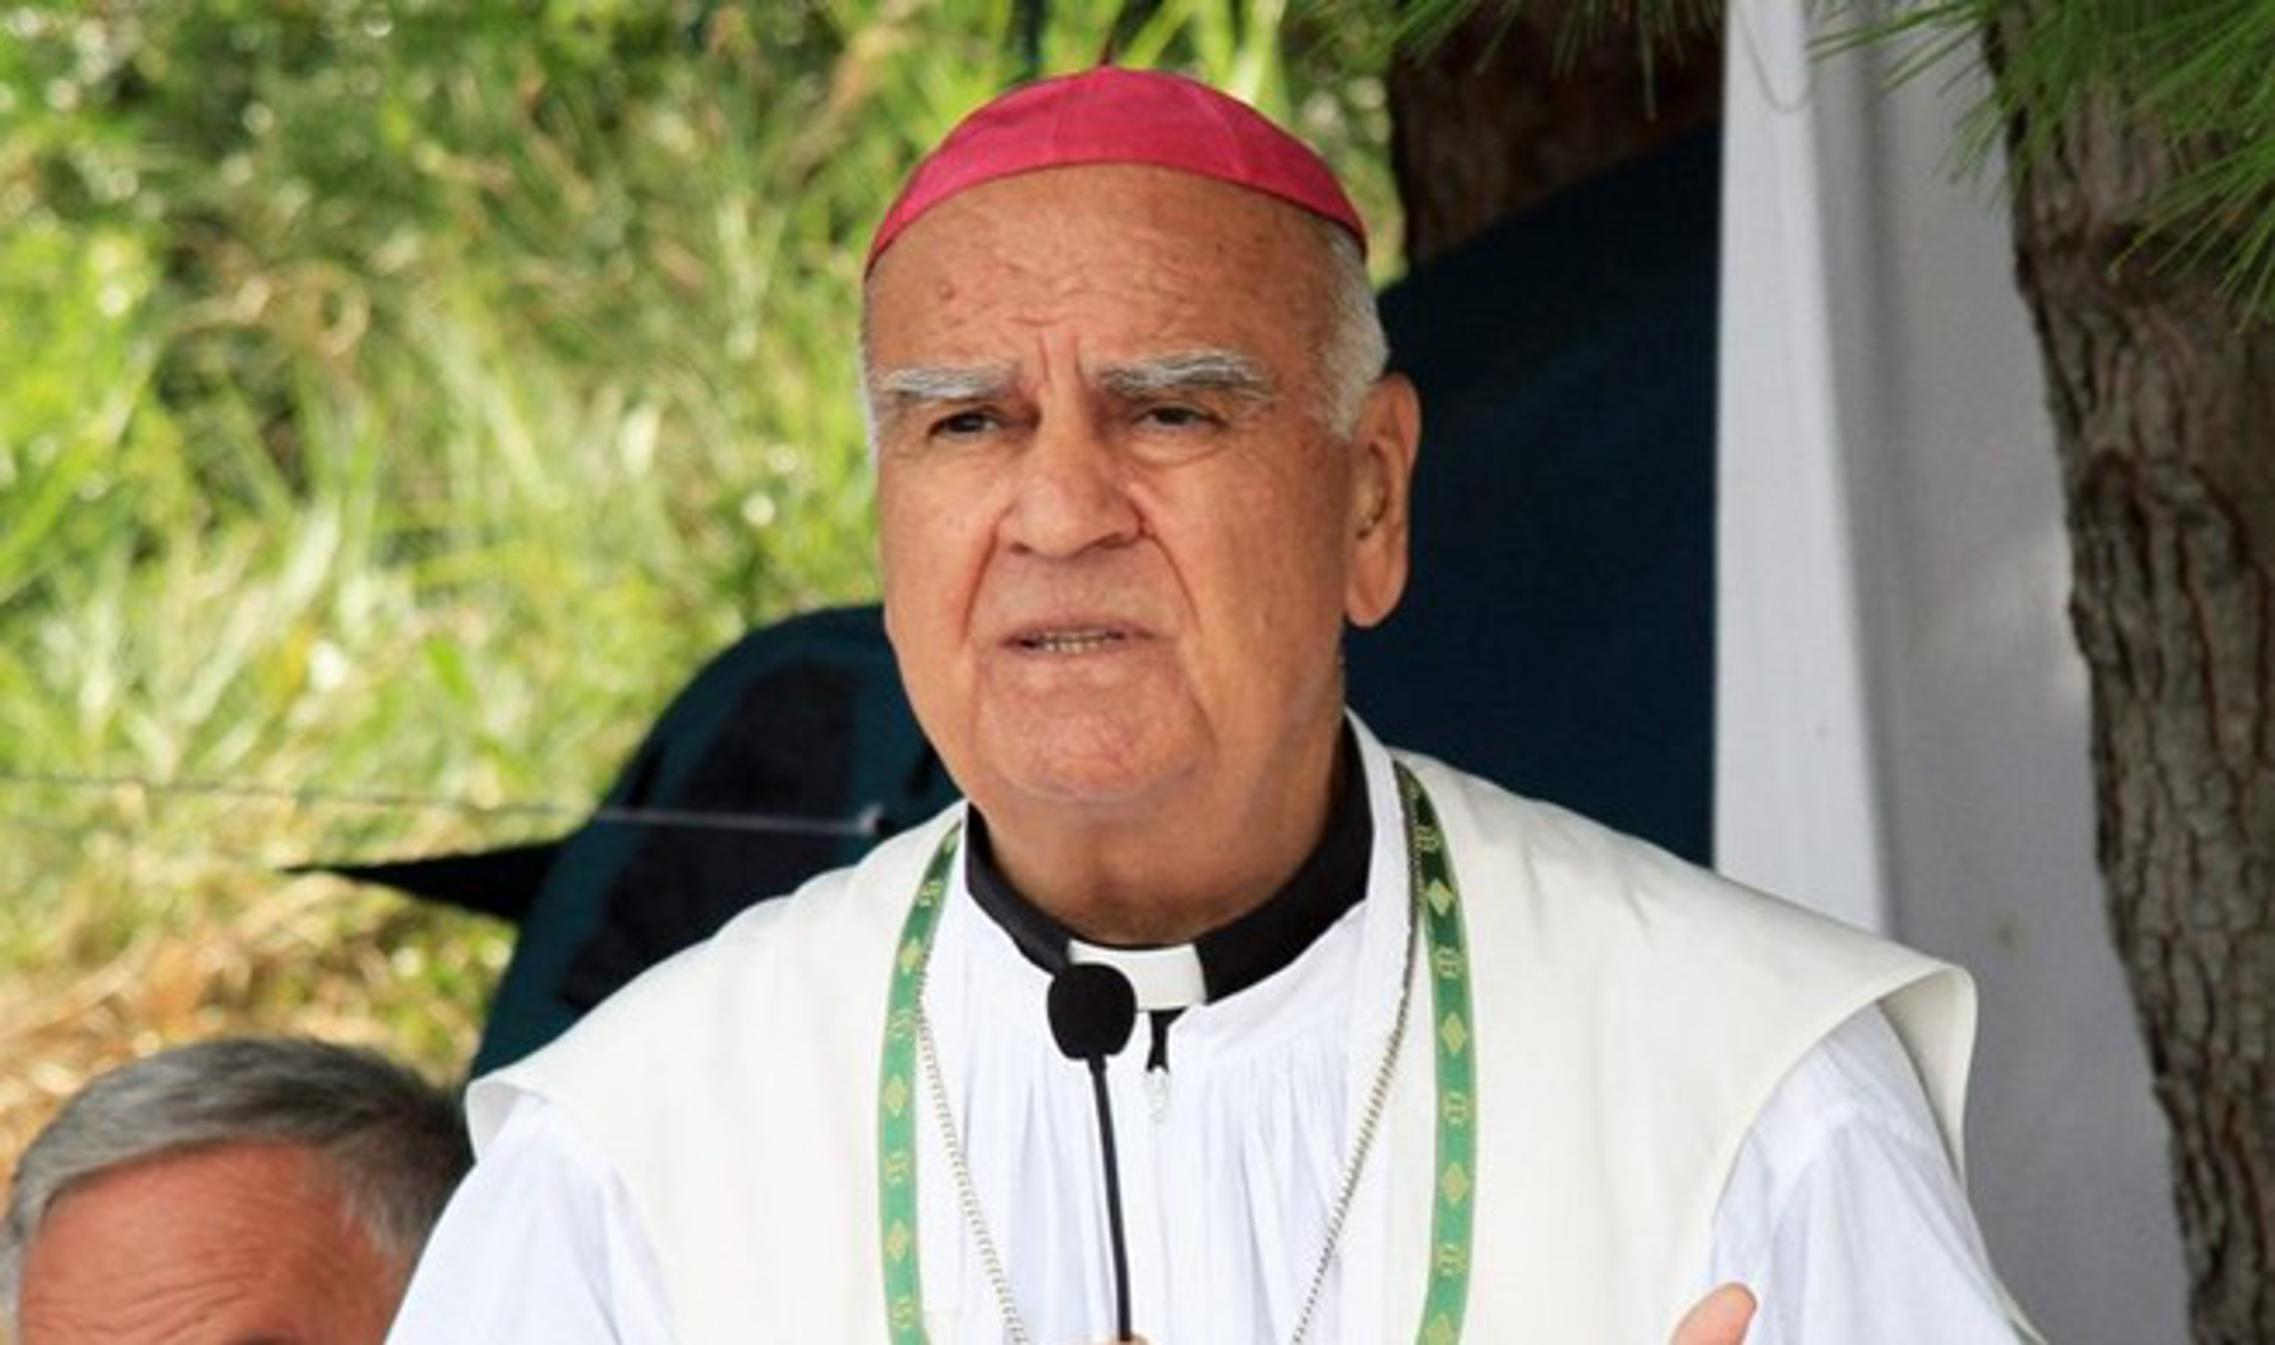 Biskup Ratko Perić